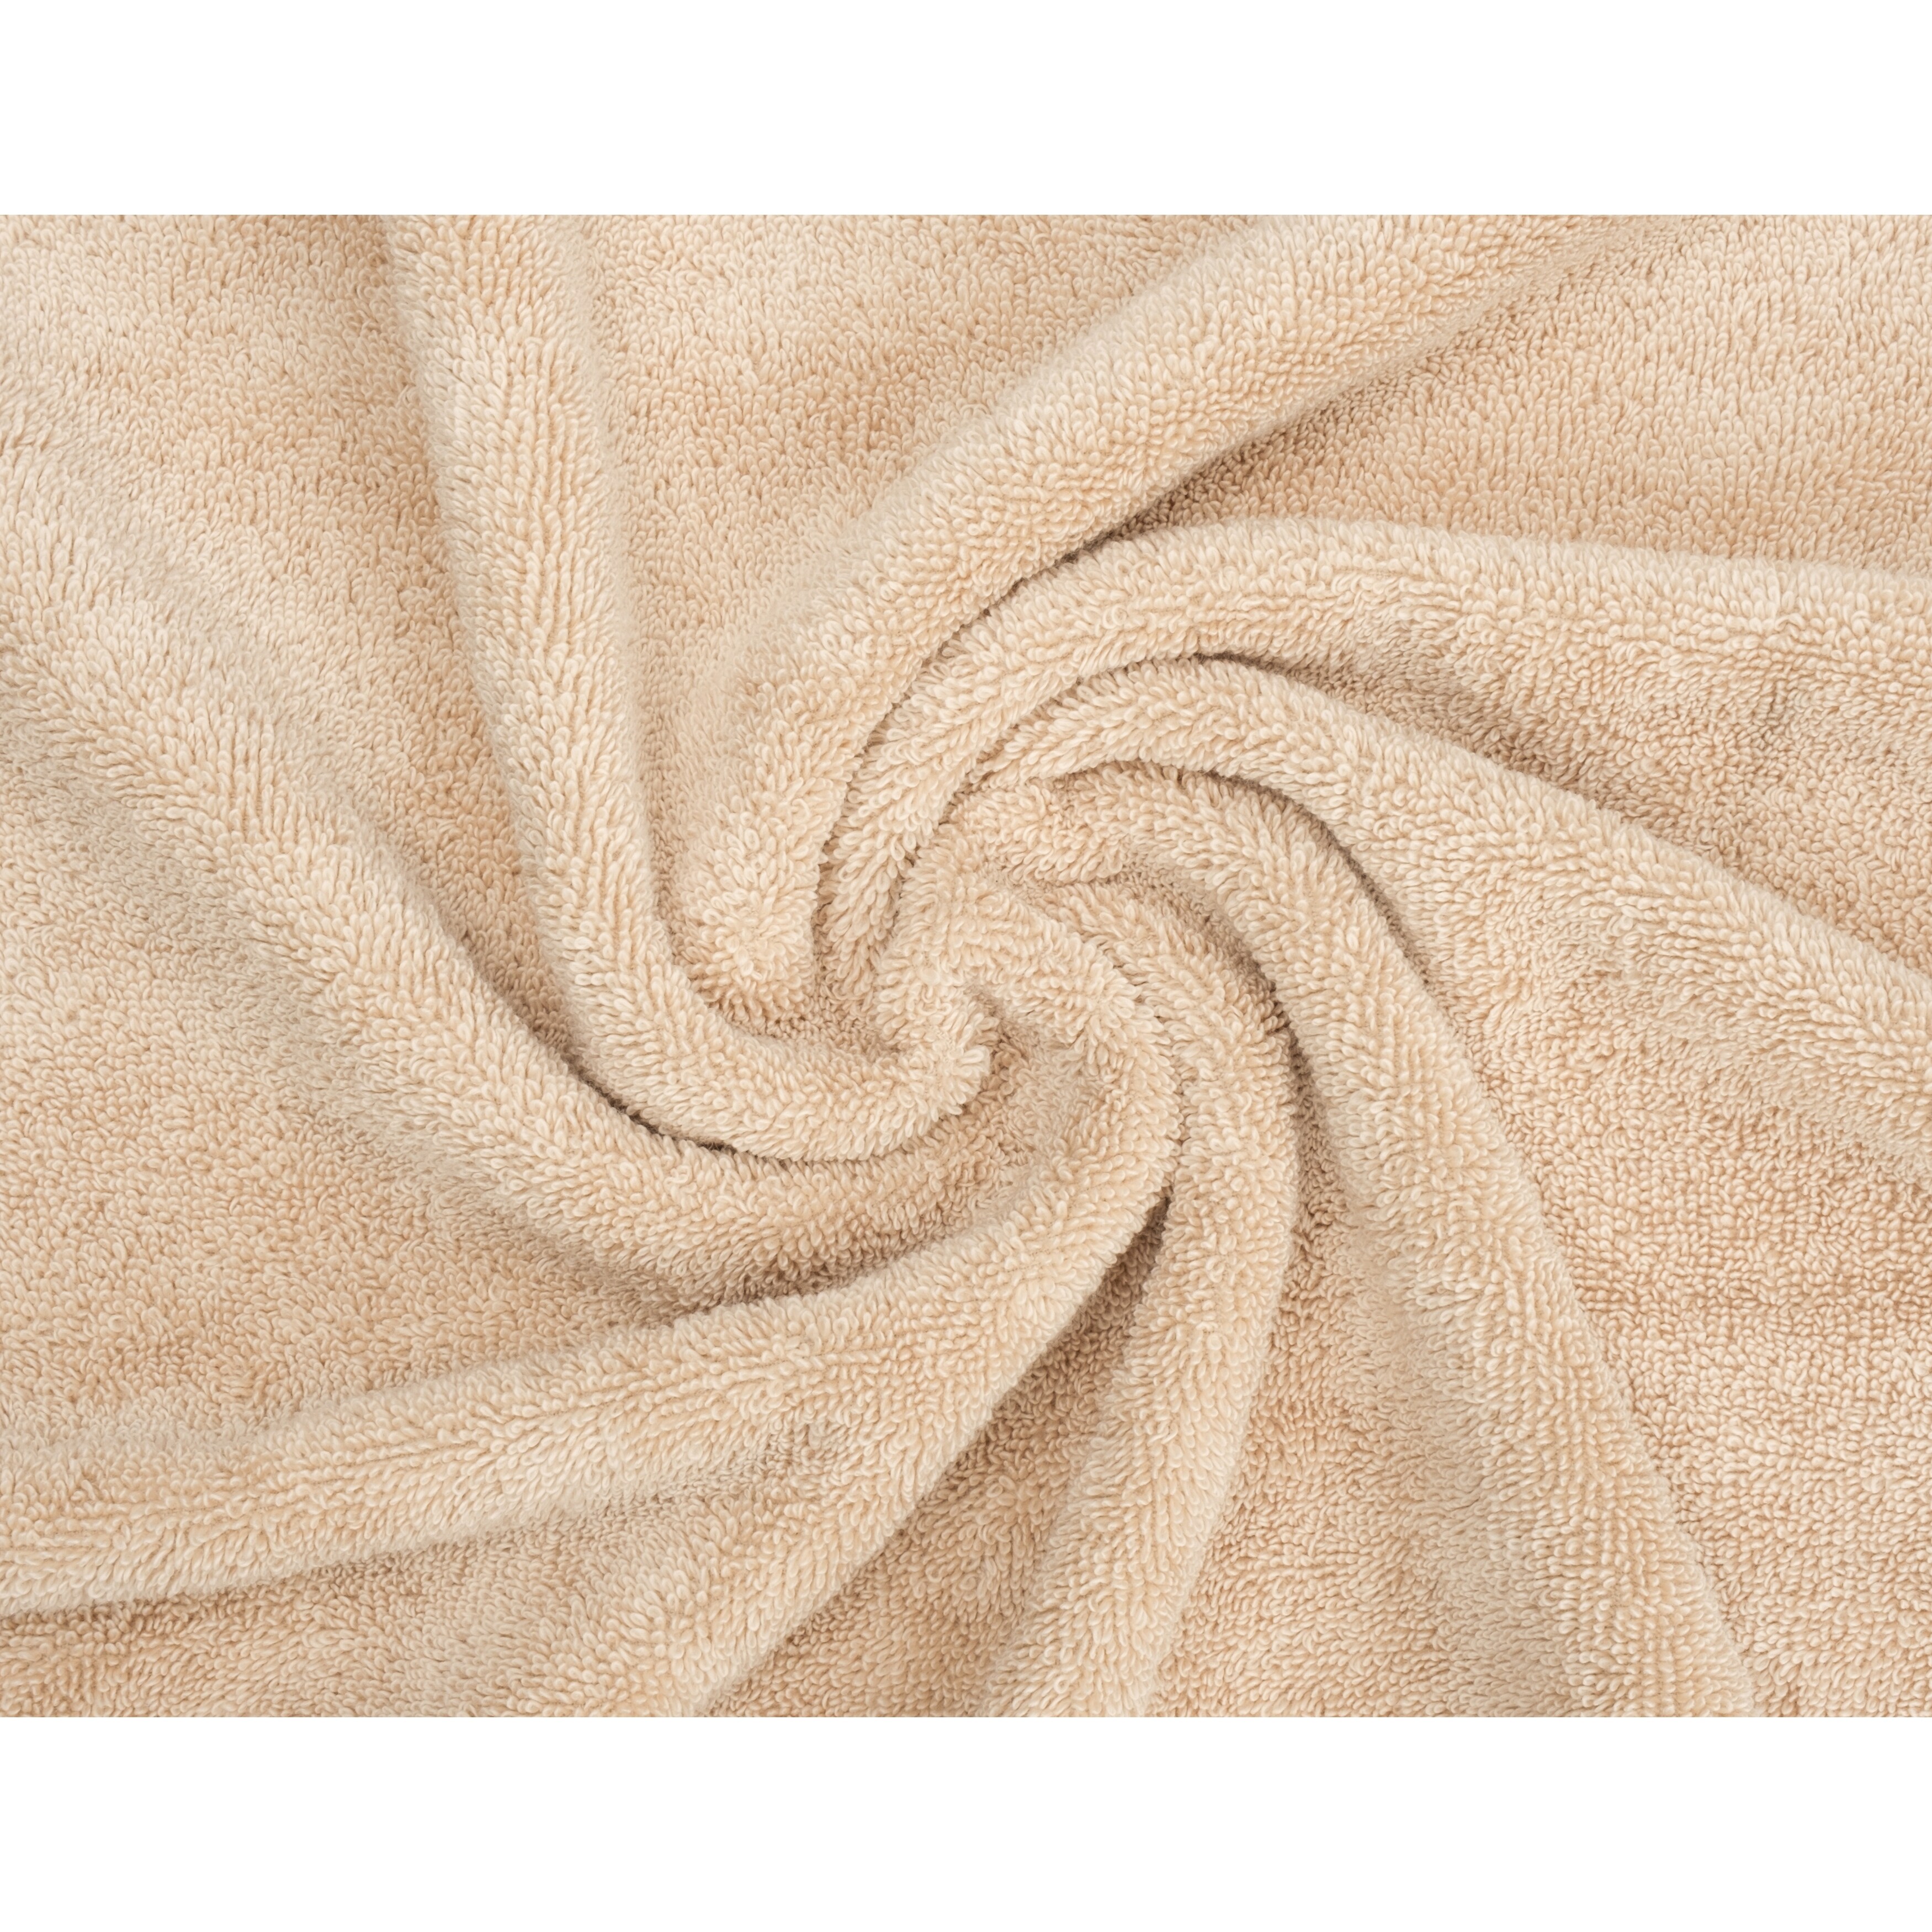 https://ak1.ostkcdn.com/images/products/is/images/direct/07d39574527b787399fc03a09c162124807f68cf/American-Soft-Linen-Salem-Collection-Turkish-Cotton-6-Piece-Towel-Set.jpg